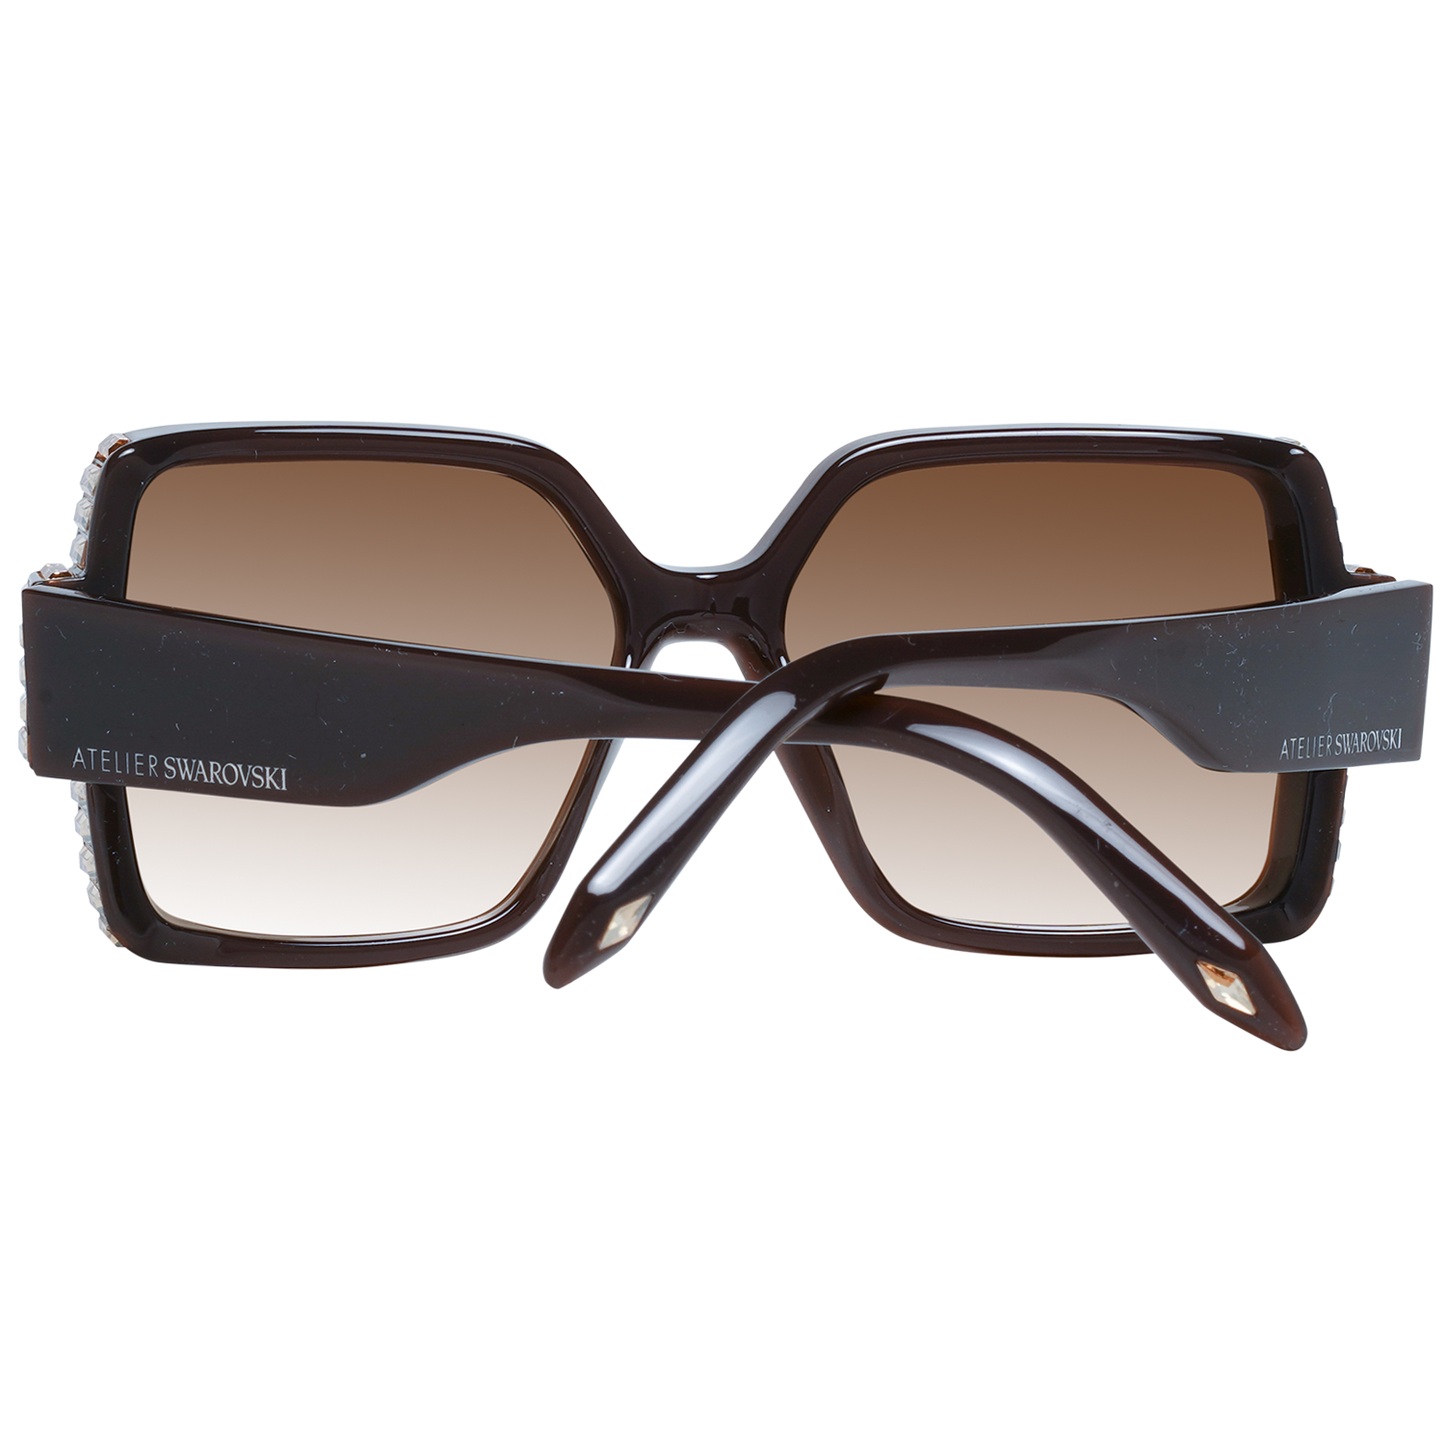 Atelier Swarovski Brown Women Sunglasses - DEA STILOSA MILANO